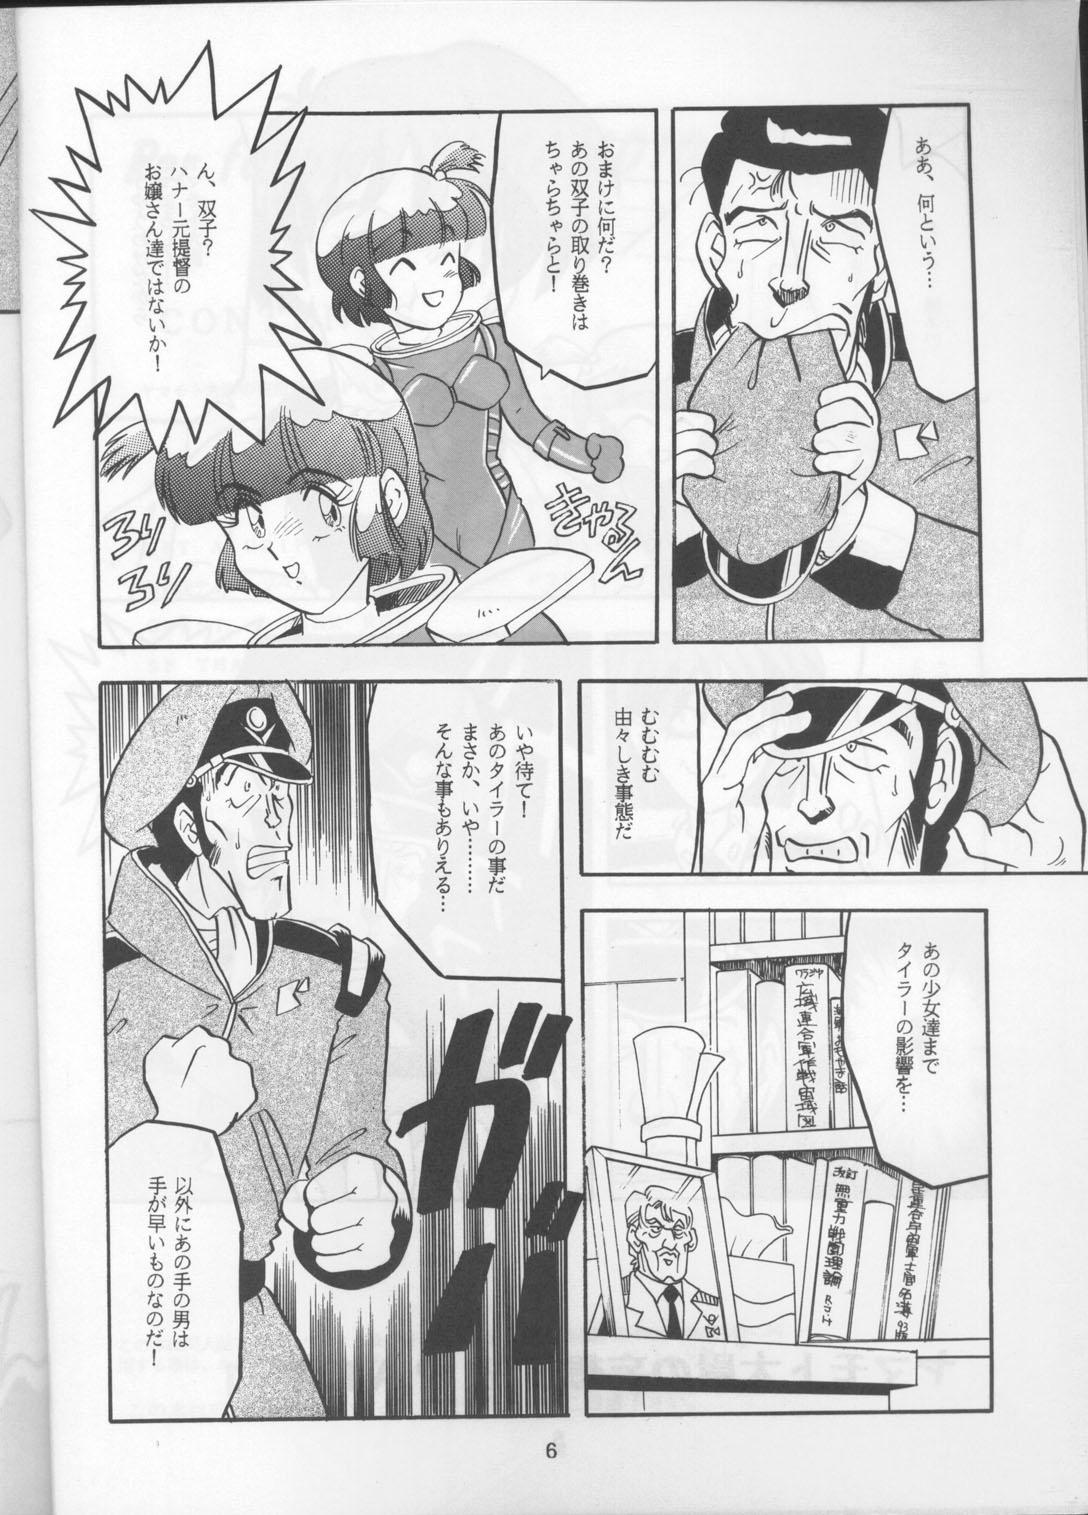 Exgirlfriend Per favore, YAMAMOTO！ - Irresponsible captain tylor Free Hardcore - Page 5